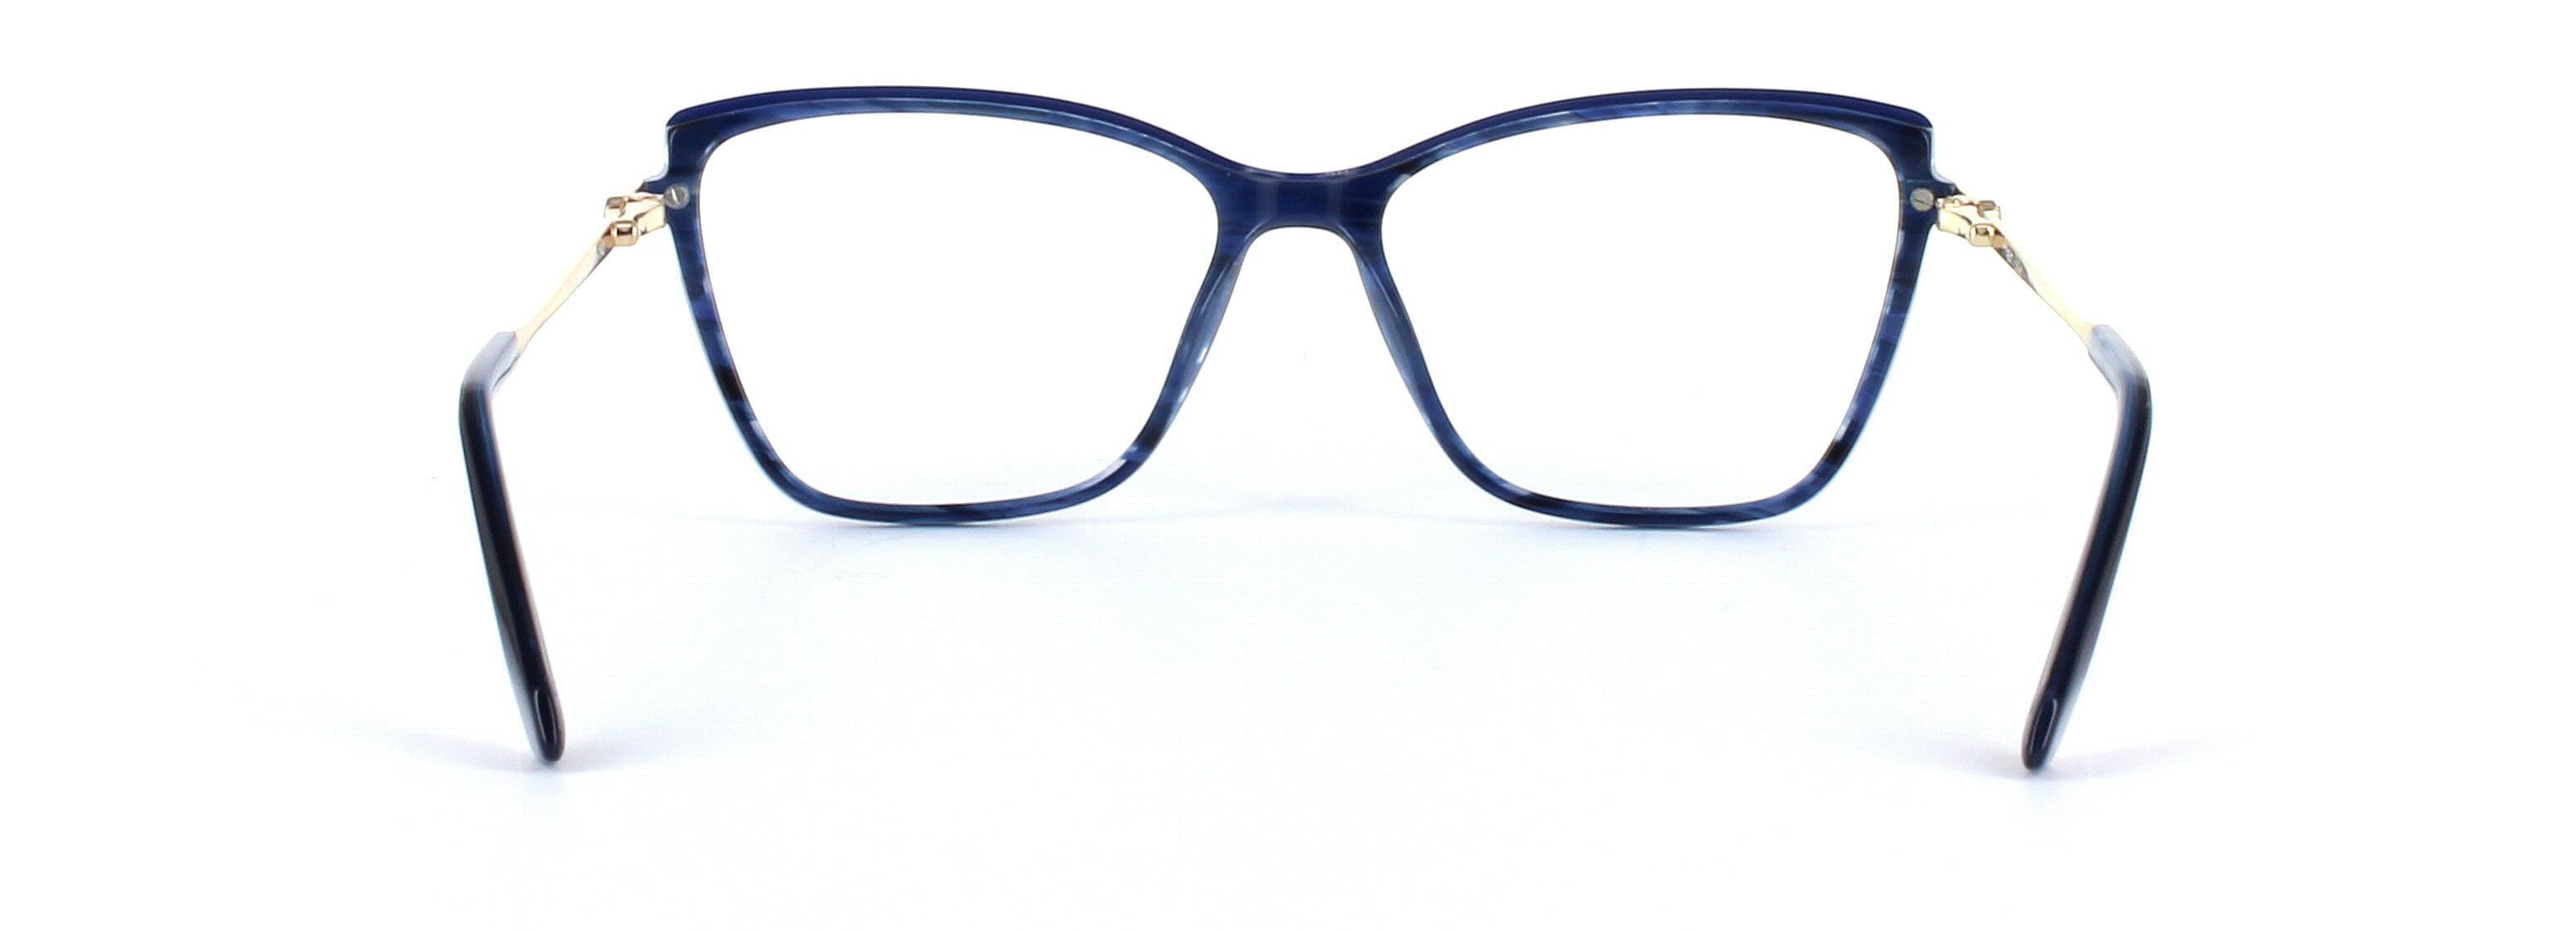 Jeanine Blue Full Rim Acetate Glasses - Image View 3